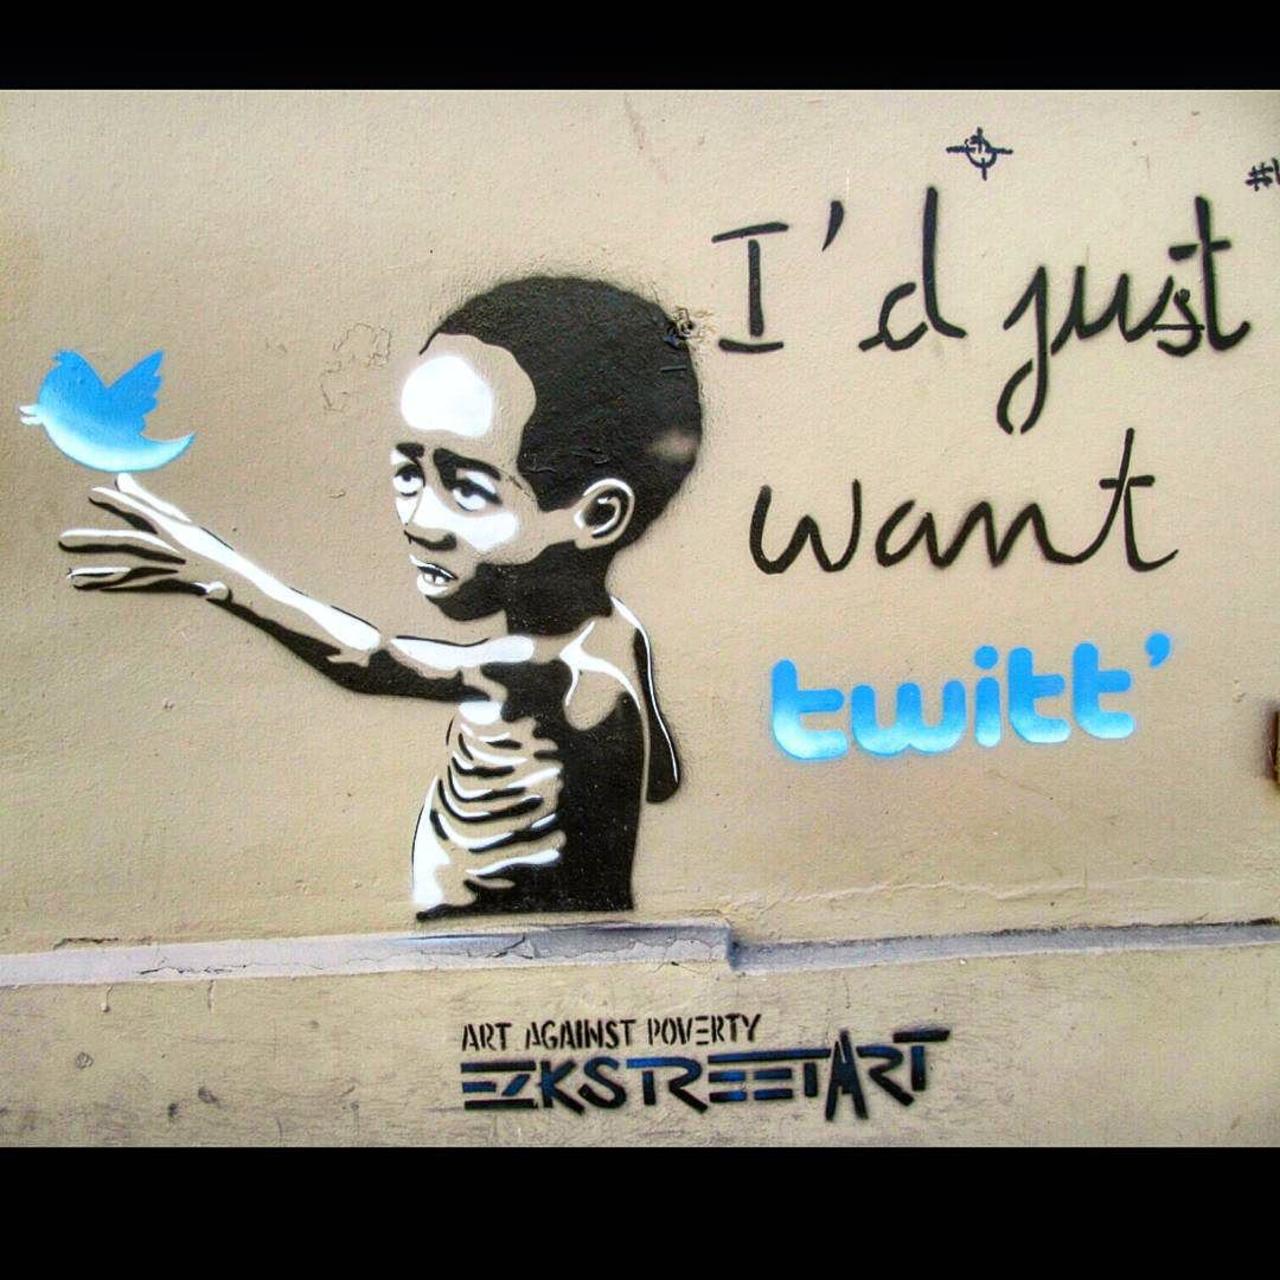 RT @circumjacent_fr: #Paris #graffiti photo by @nickiemtl http://ift.tt/1jmTTDJ #StreetArt http://t.co/FjgRJejZfn